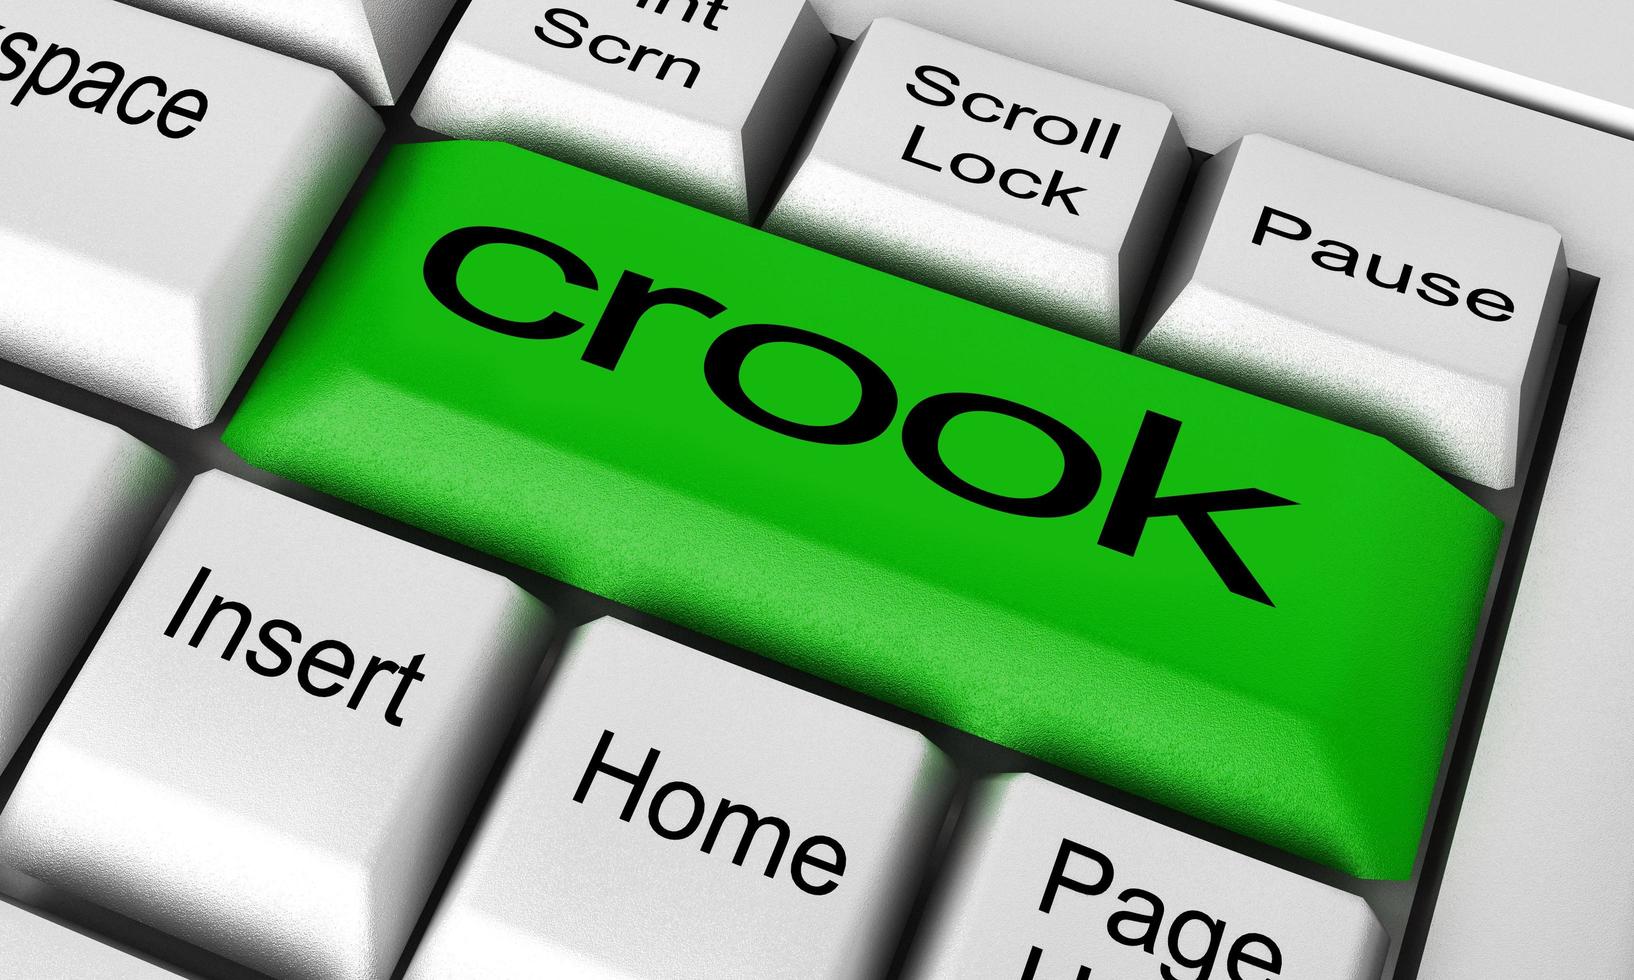 crook word on keyboard button photo